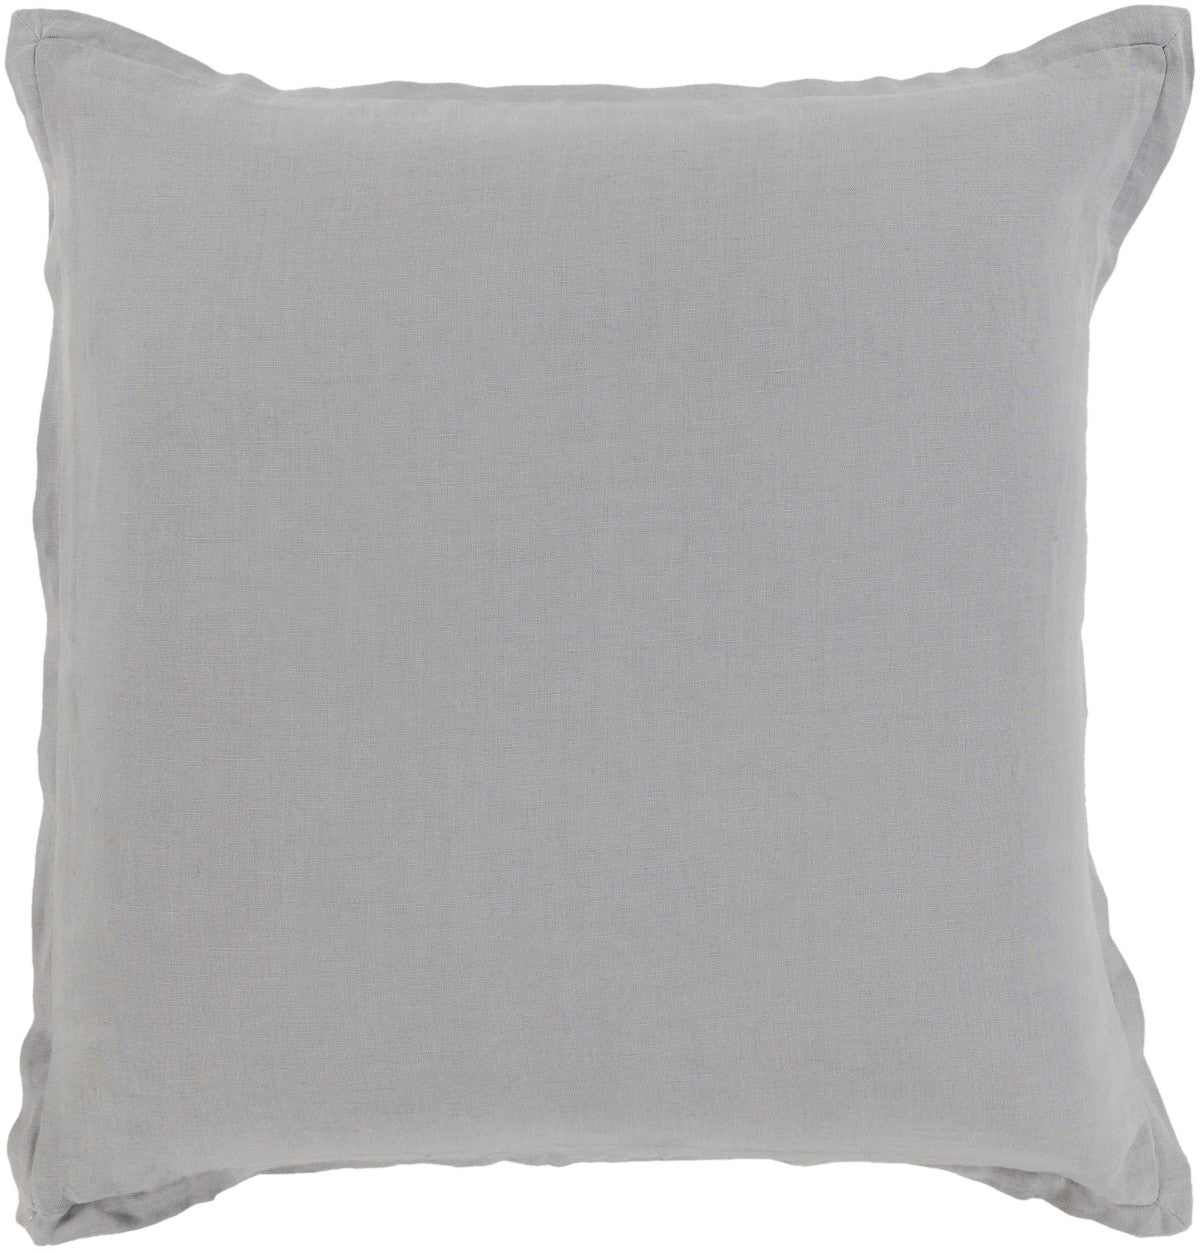 Surya Orianna OR008 Pillow